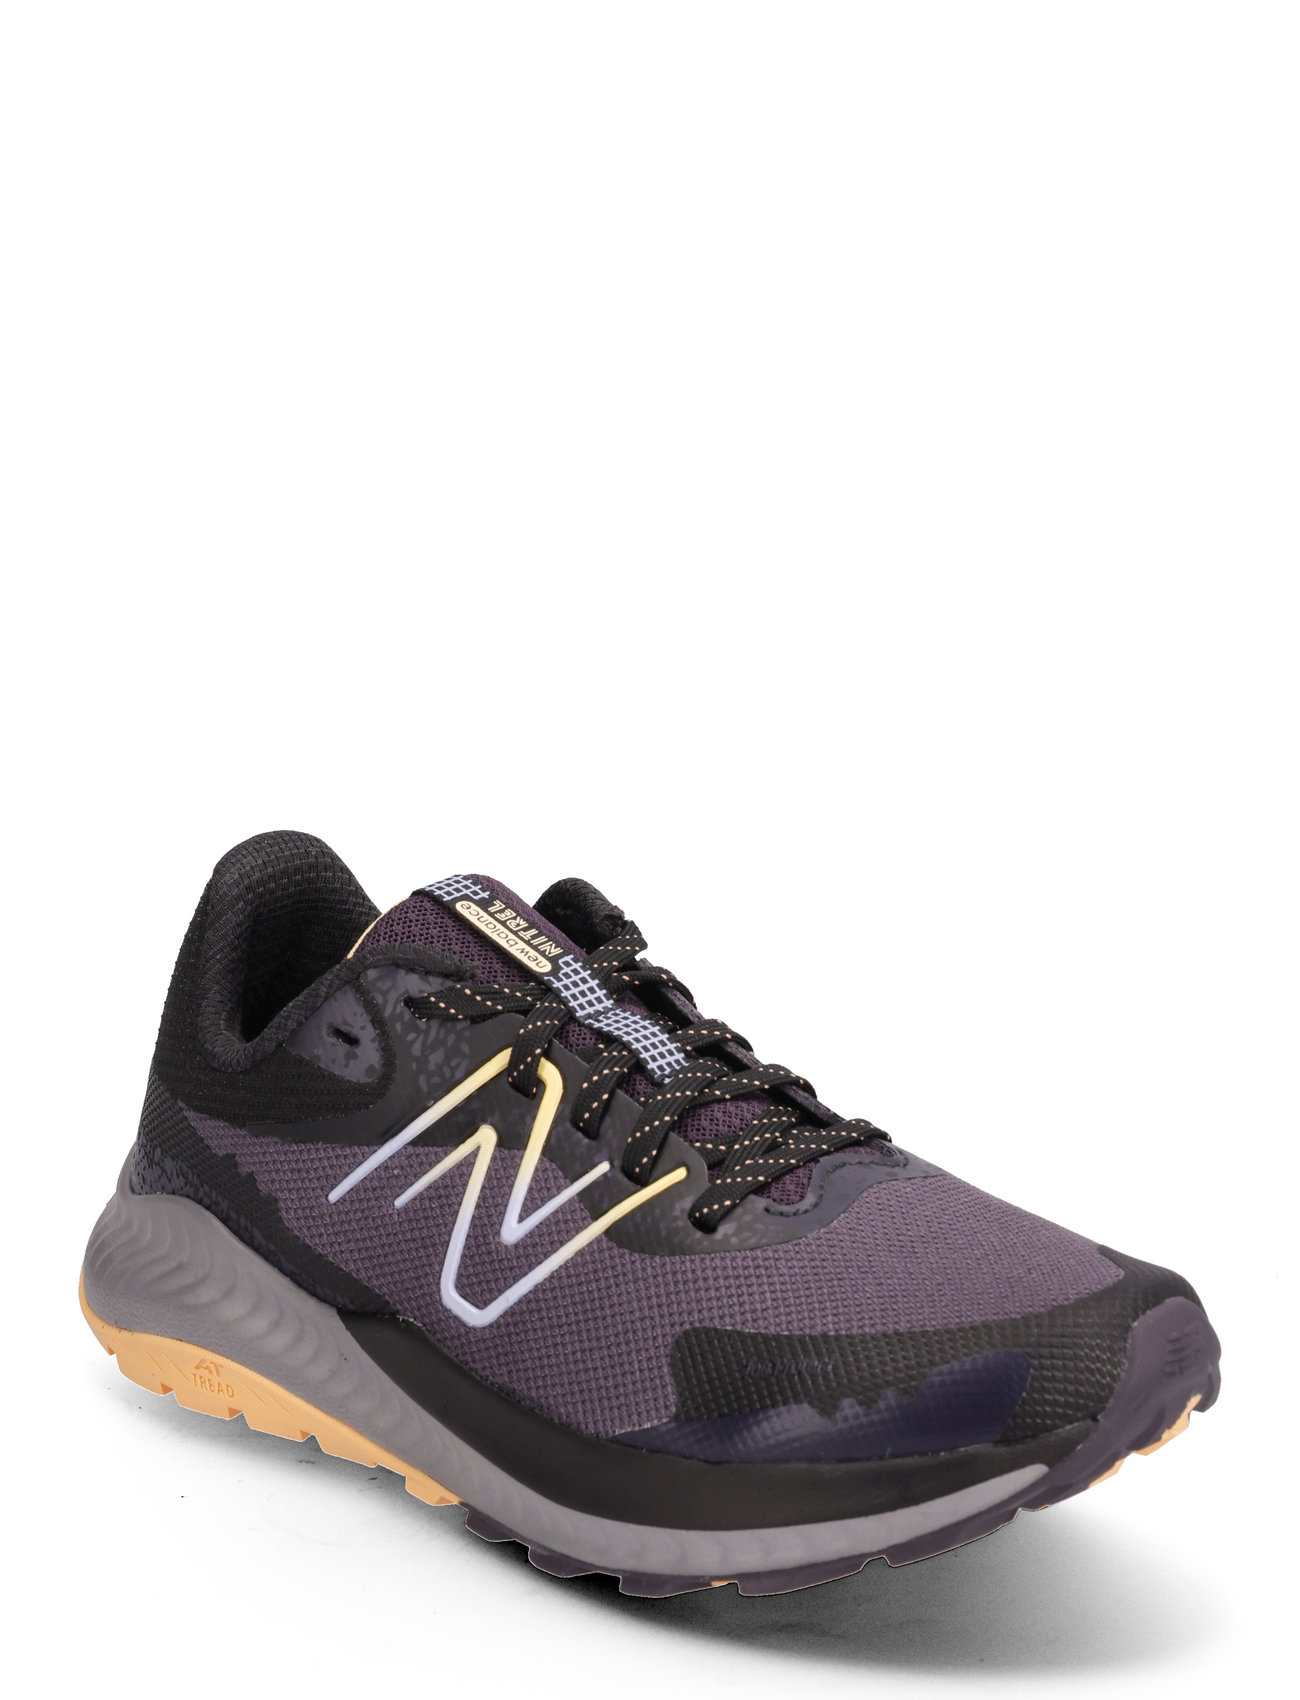 Dynasoft Nitrel V5 Sport Sport Shoes Running Shoes Purple New Balance